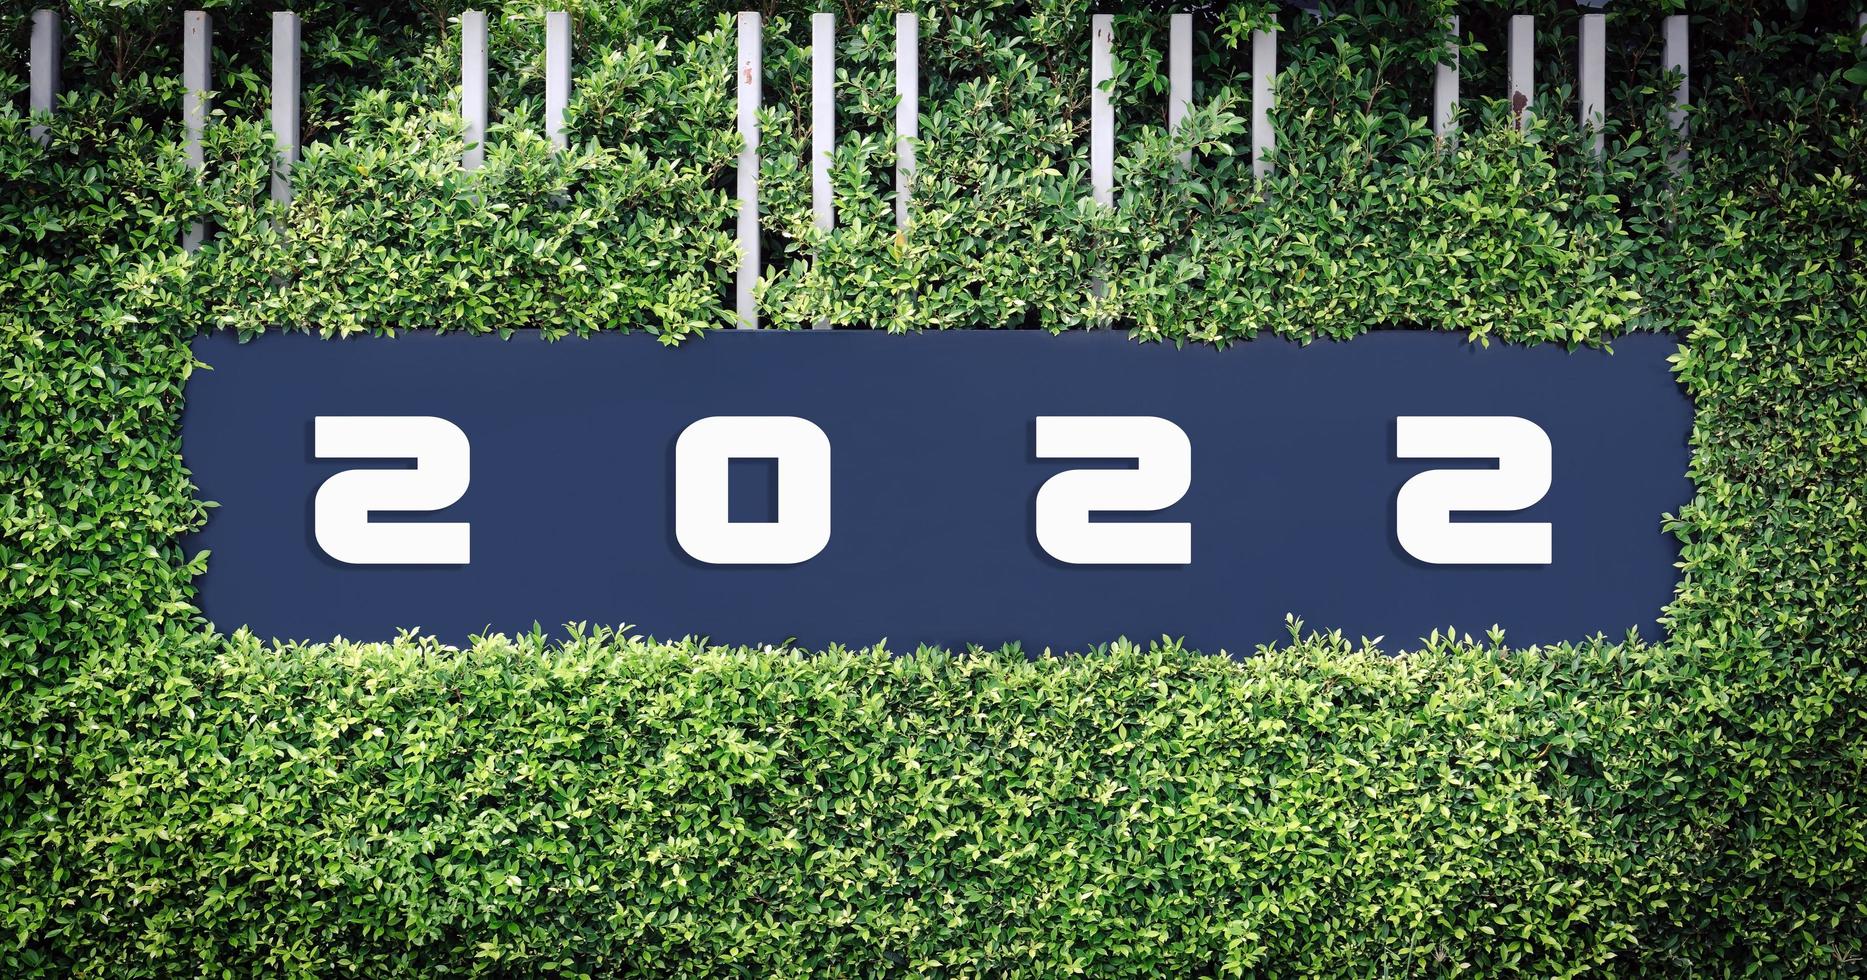 logotipo número 2022 emoldurado por folhas verdes. foto